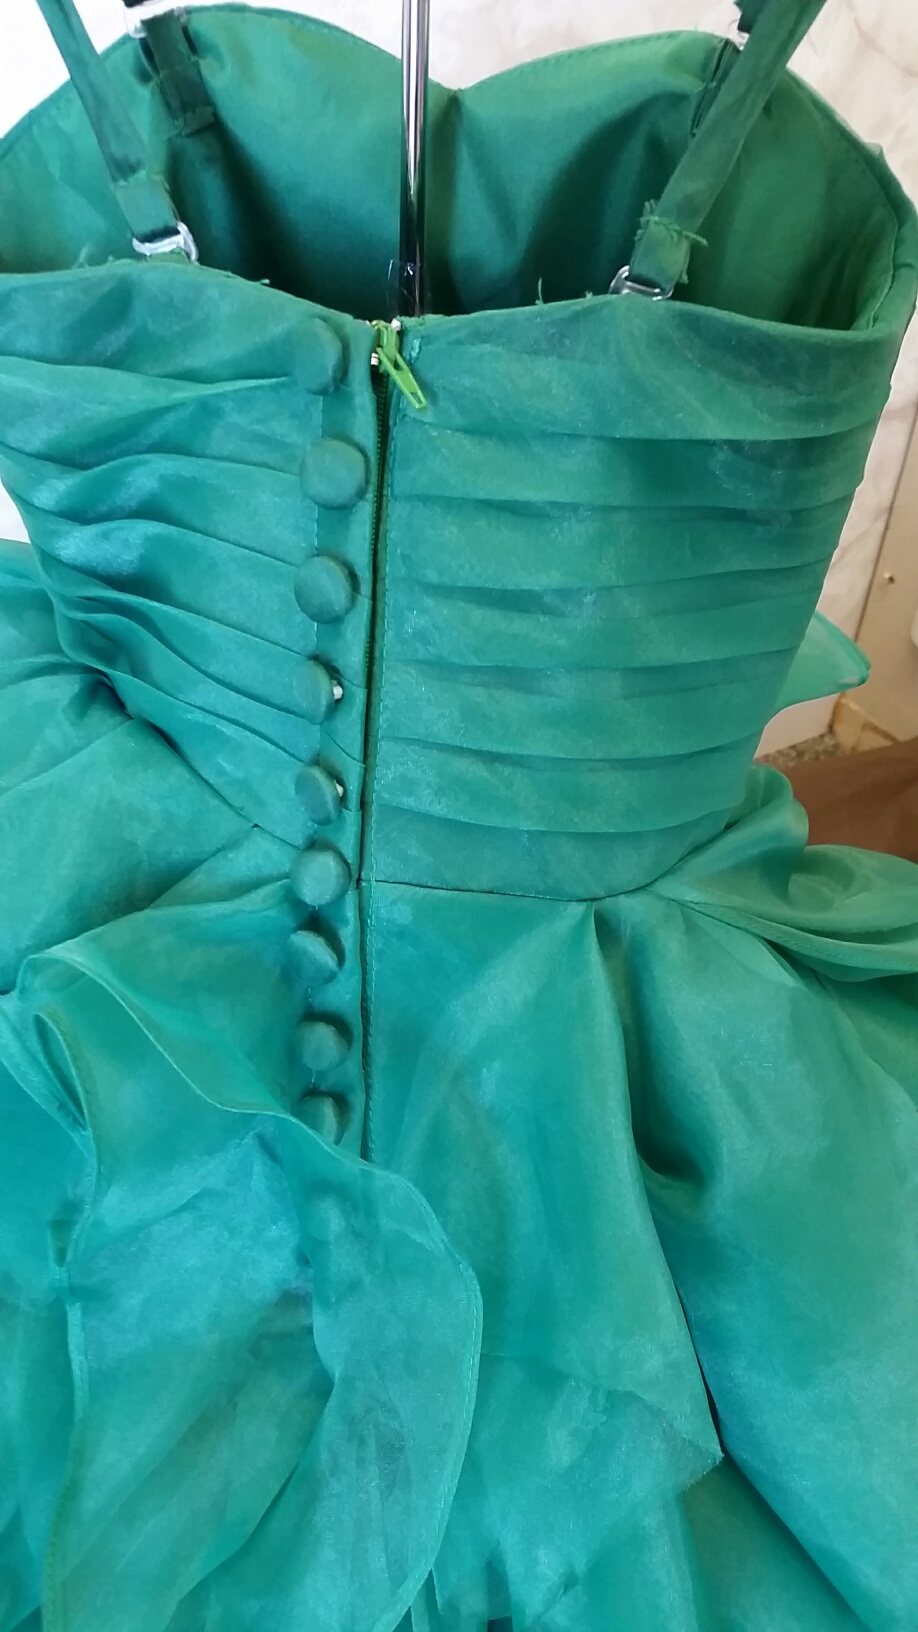 green ruffle infant wedding dress